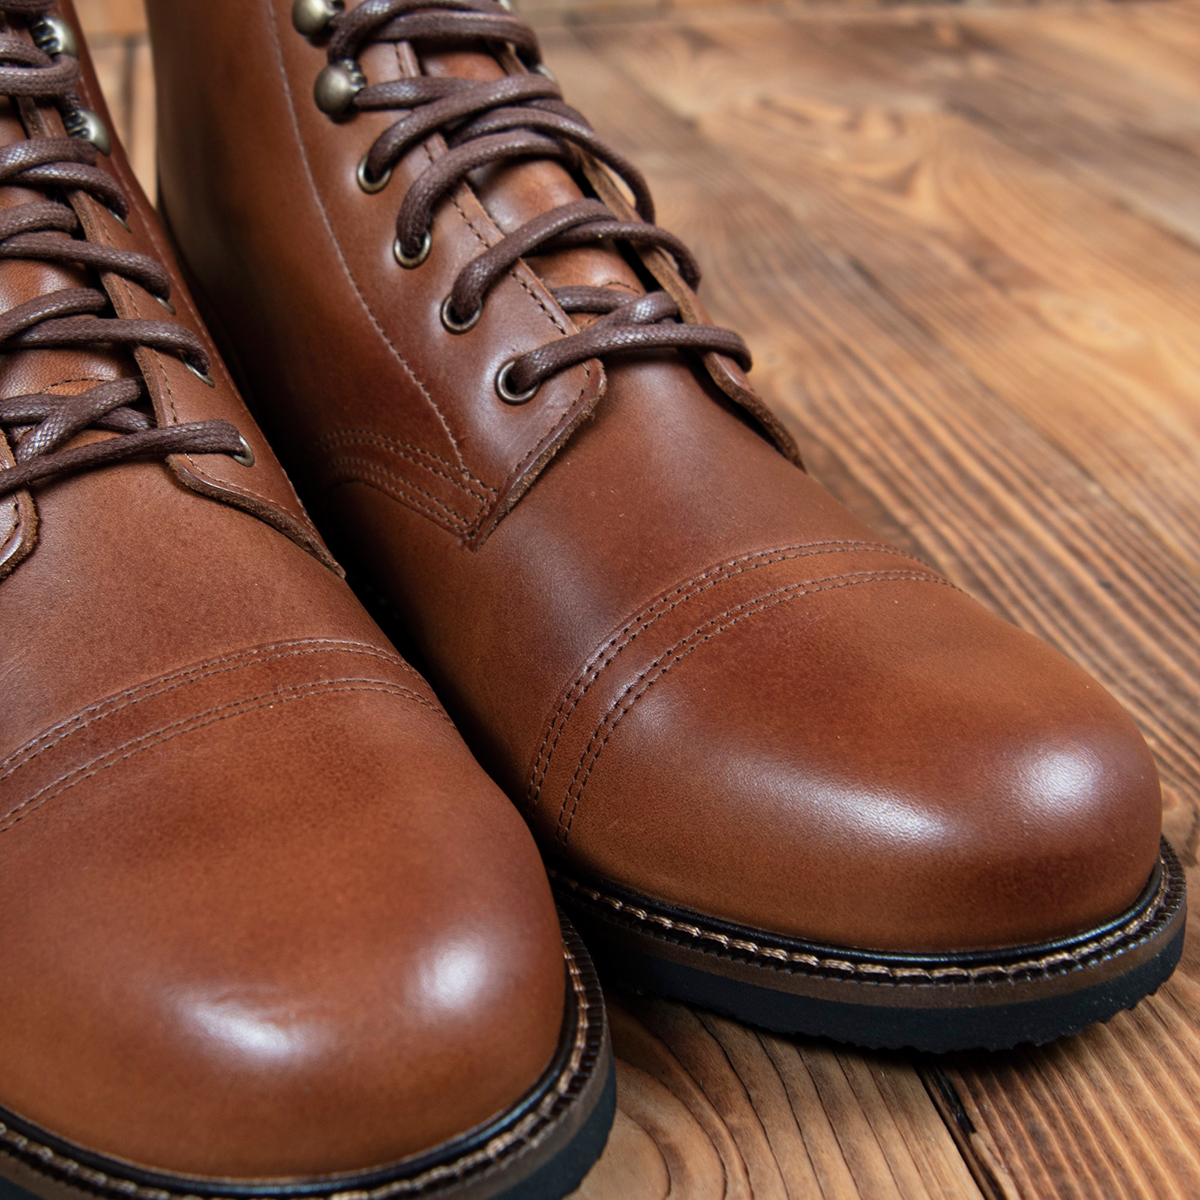 Vintage boots 1966 low quarters redwood brown